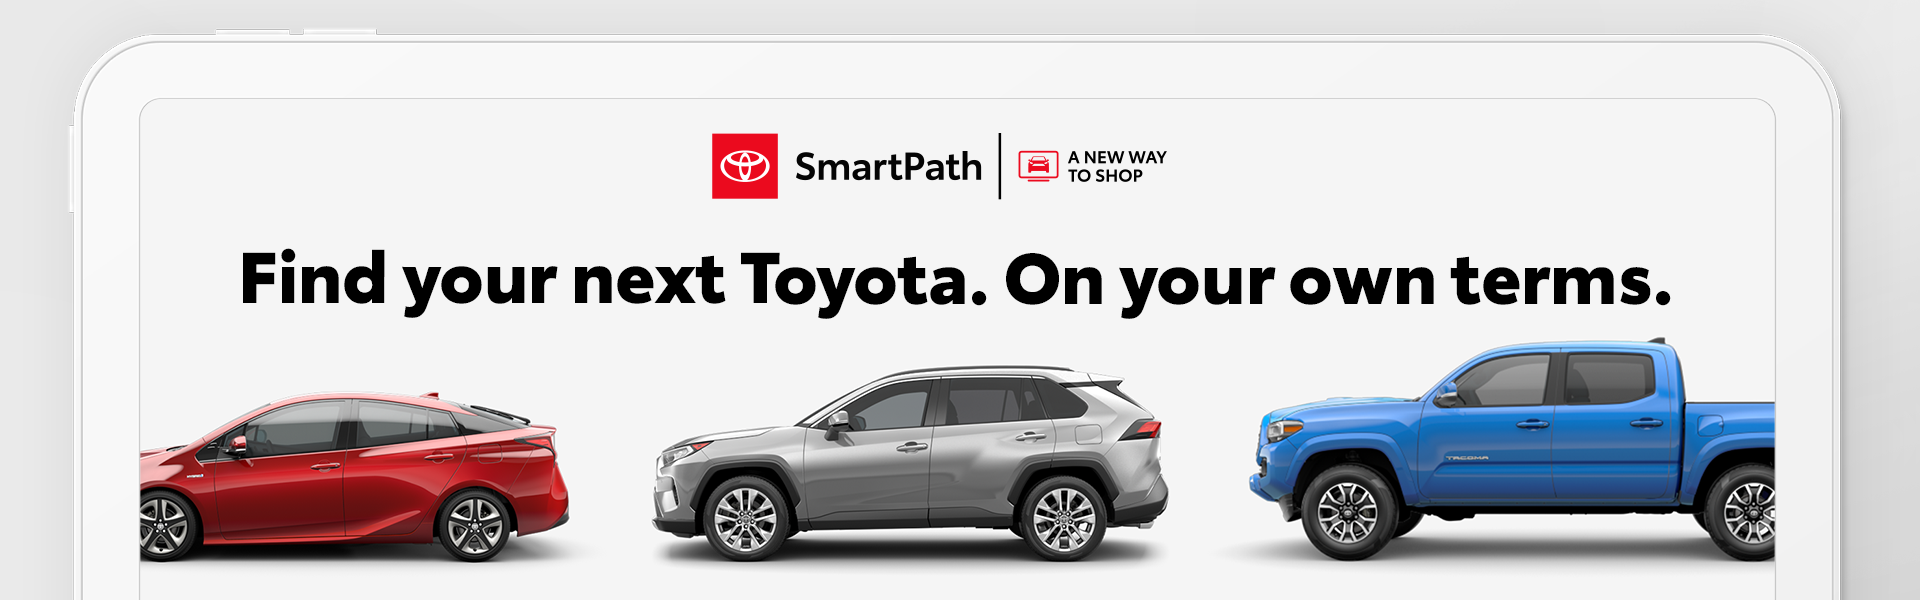 Toyota SmartPath